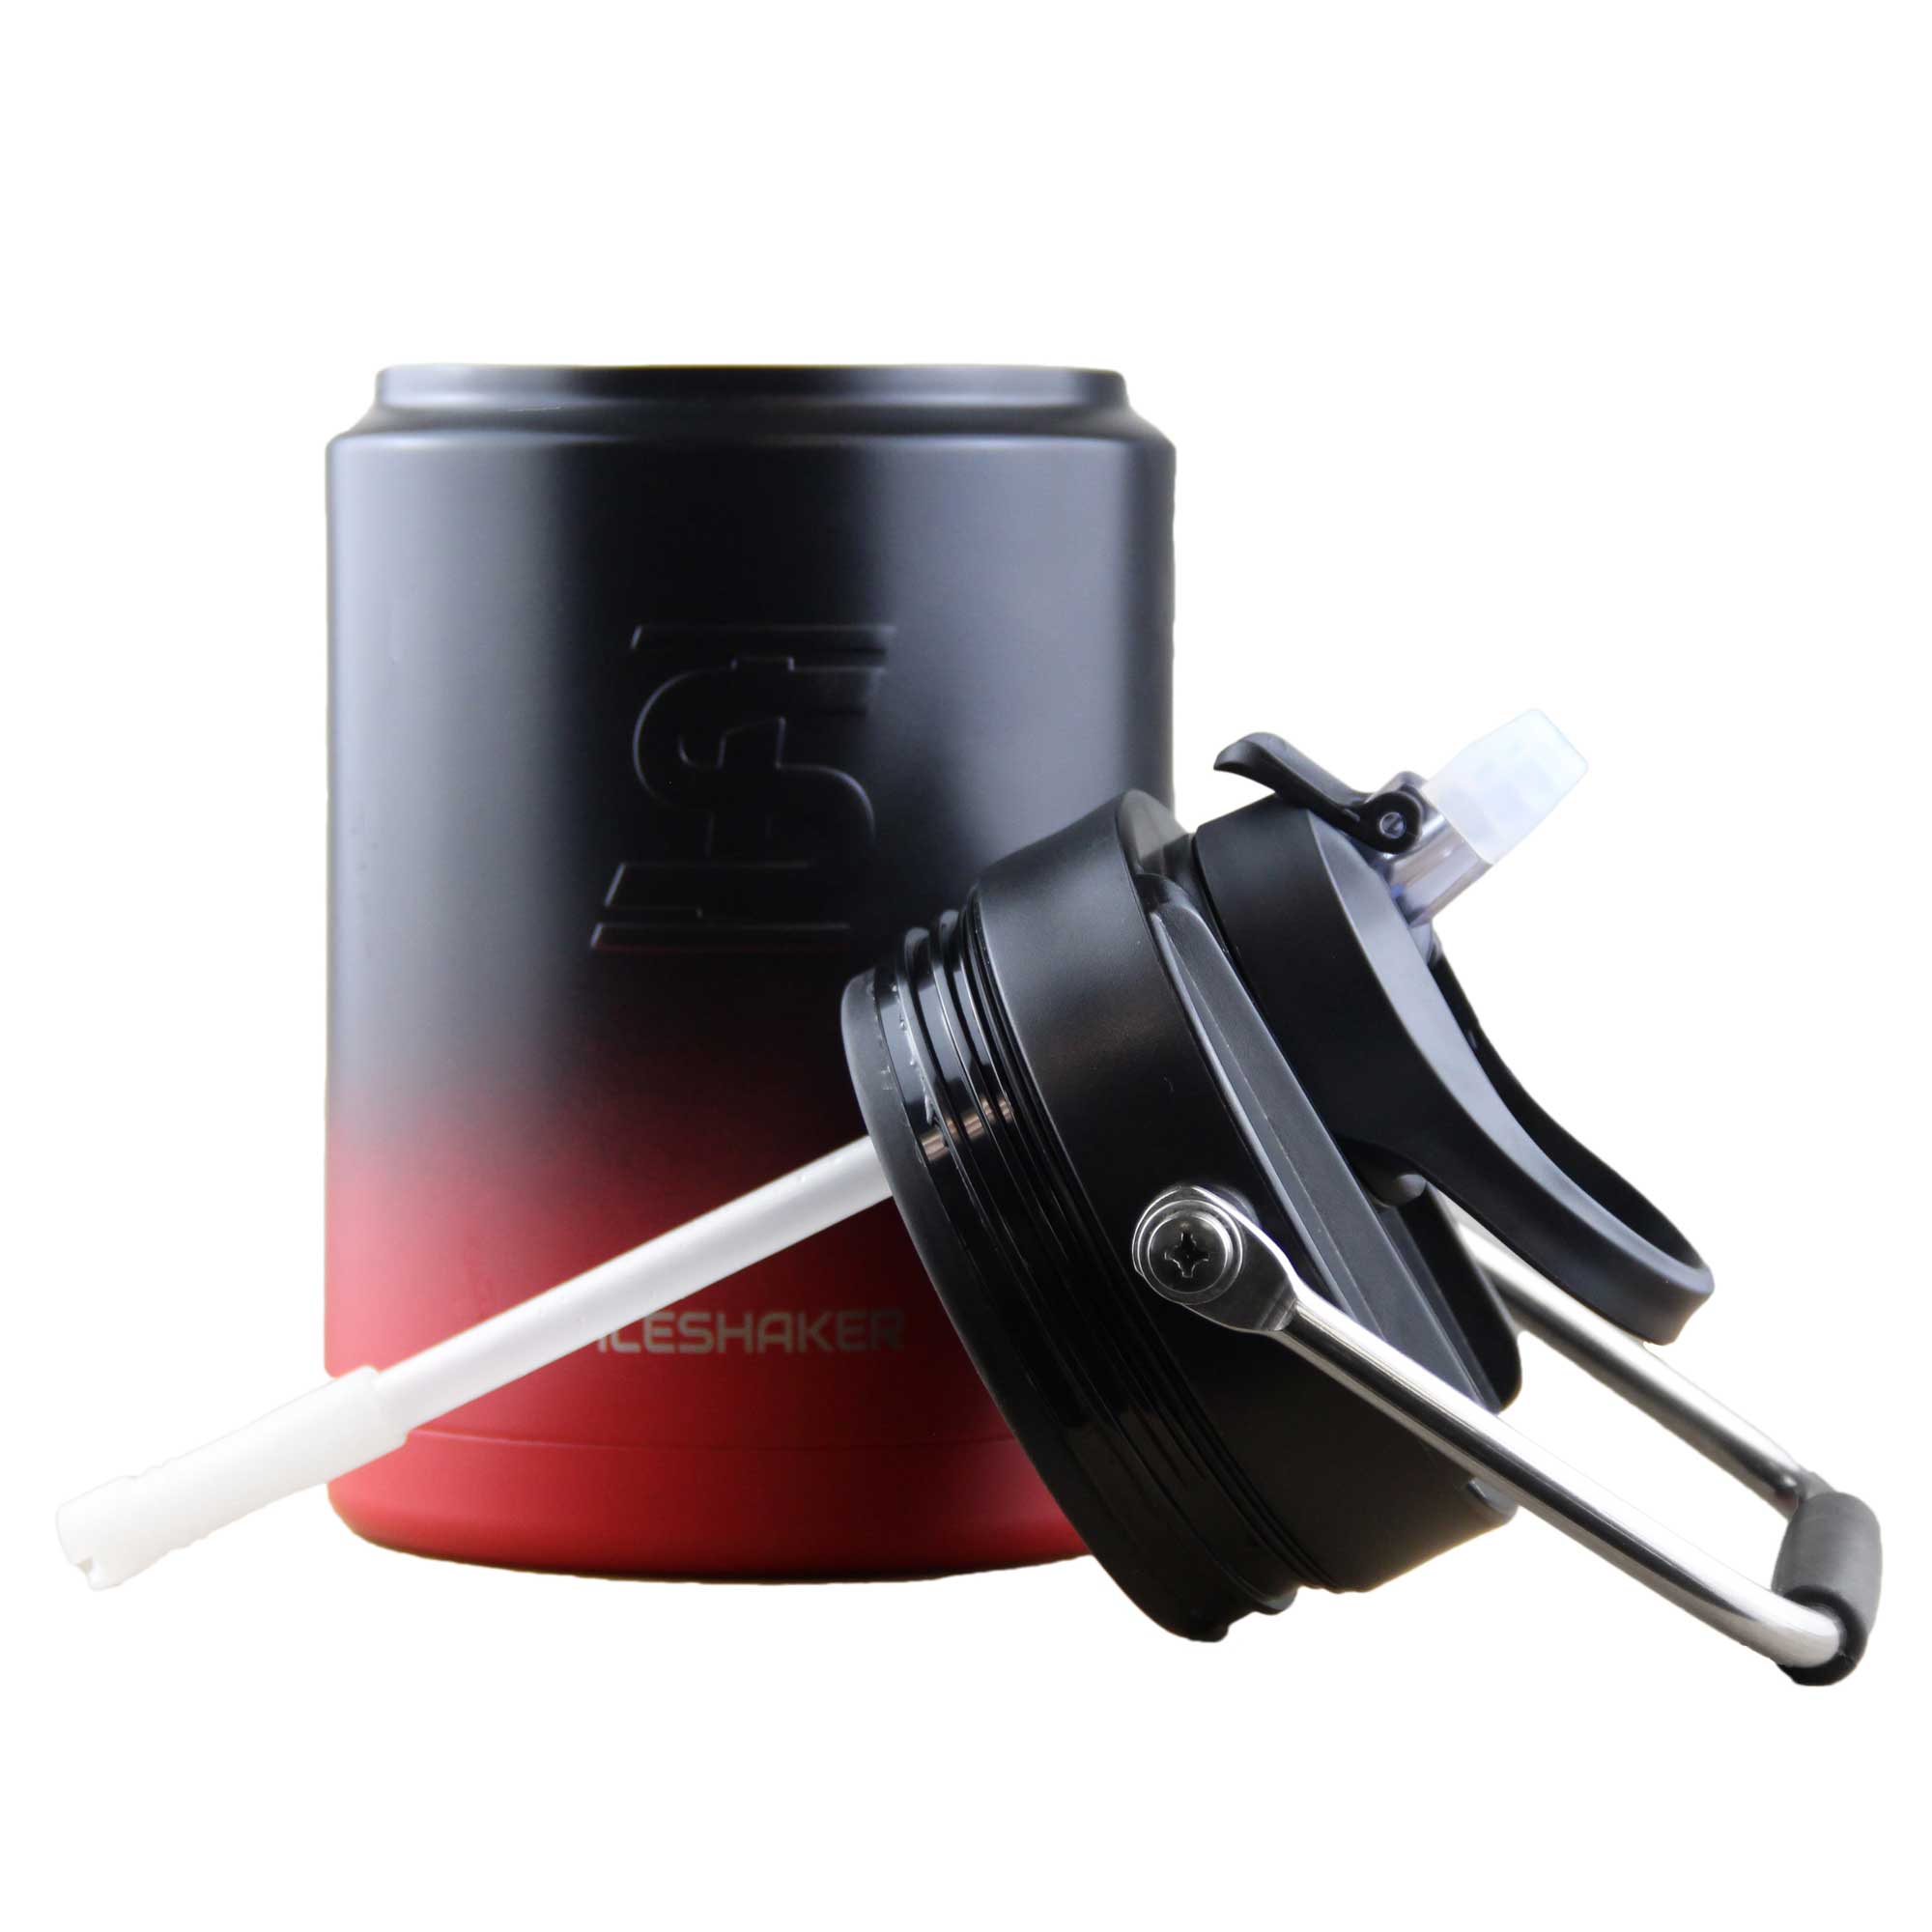 Half Gallon Jug with Metal Base - Red Black Ombre